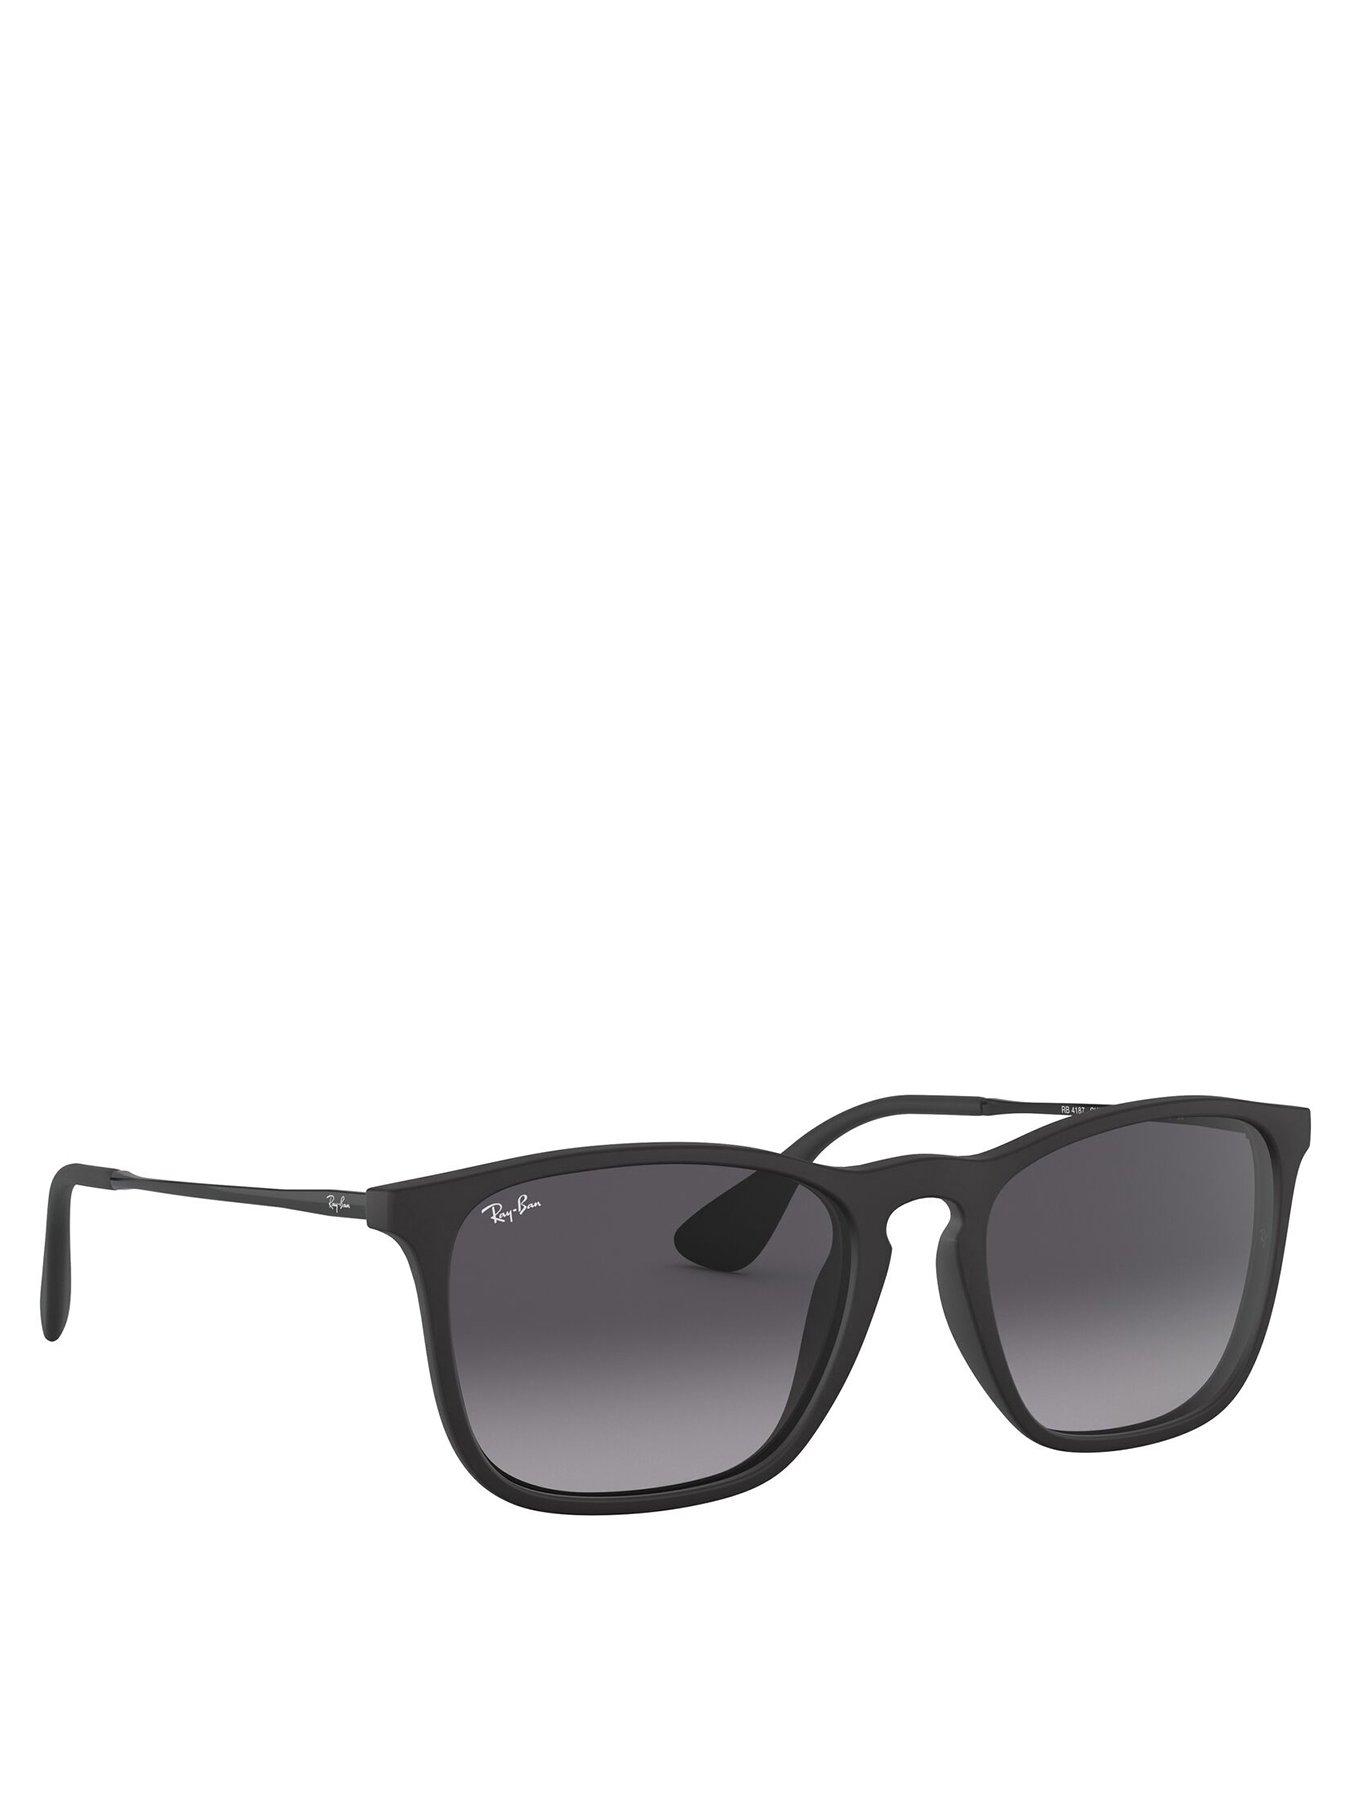 Ray-Ban Rectangle Sunglasses - Grey